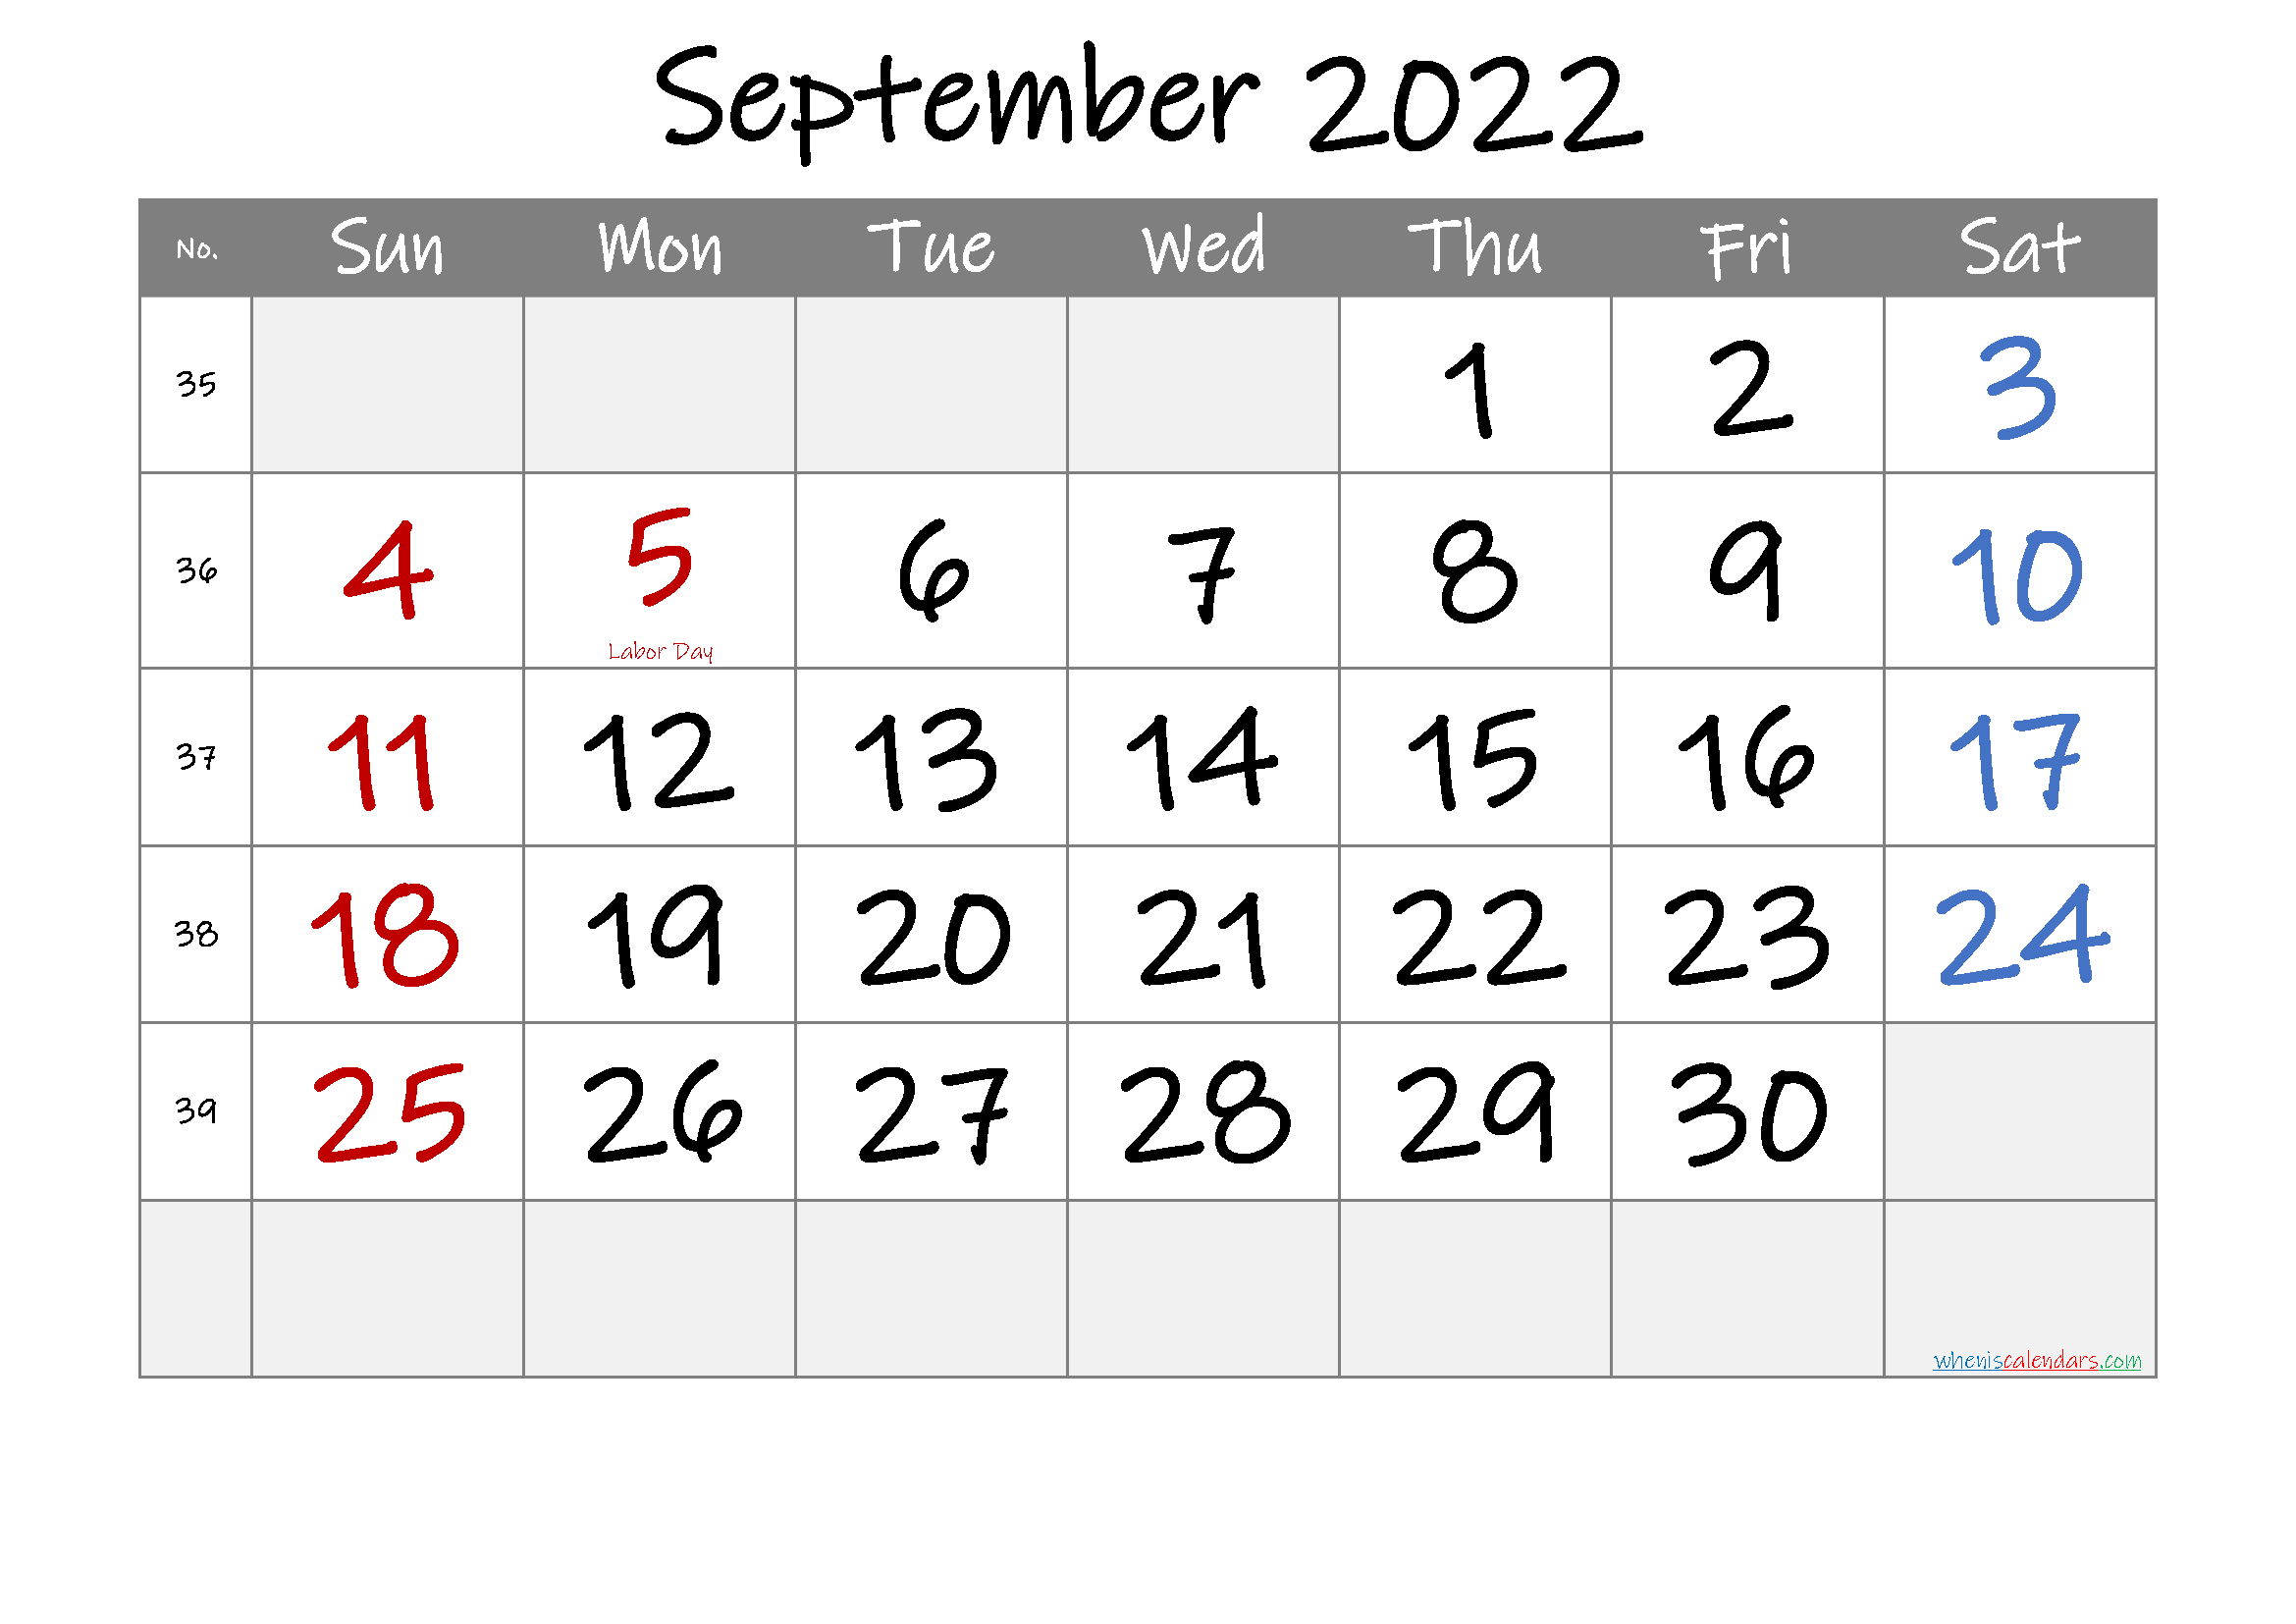 September 2022 Free Printable Calendartemplate No.if22M33 with Calendar September 2022 To August 2022